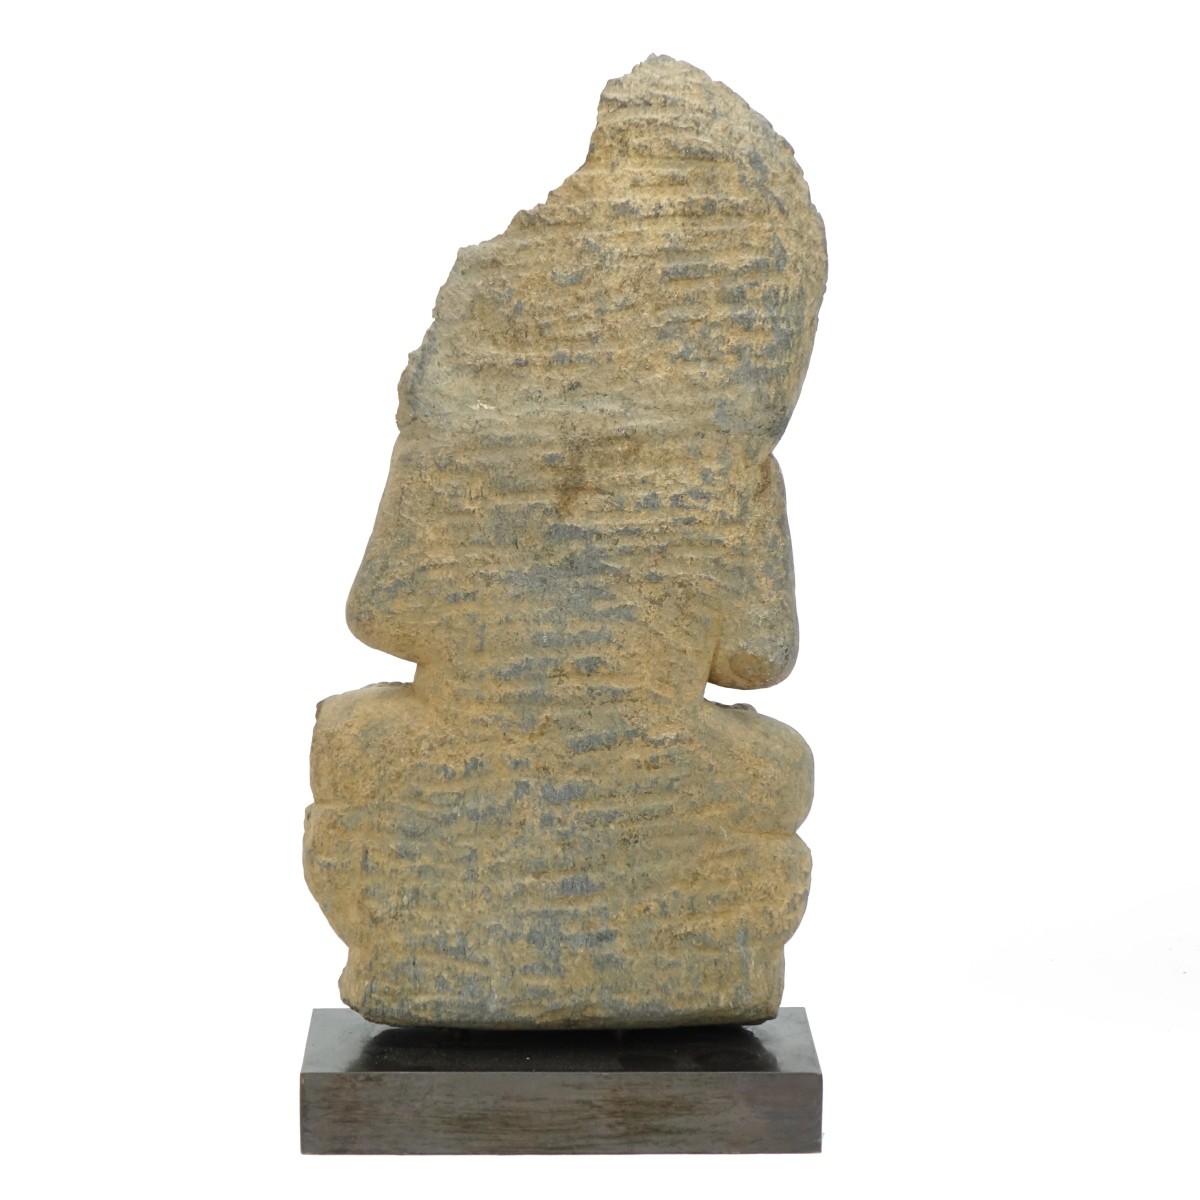 3rd Cent. Ghadaran Stone Buddha Figure